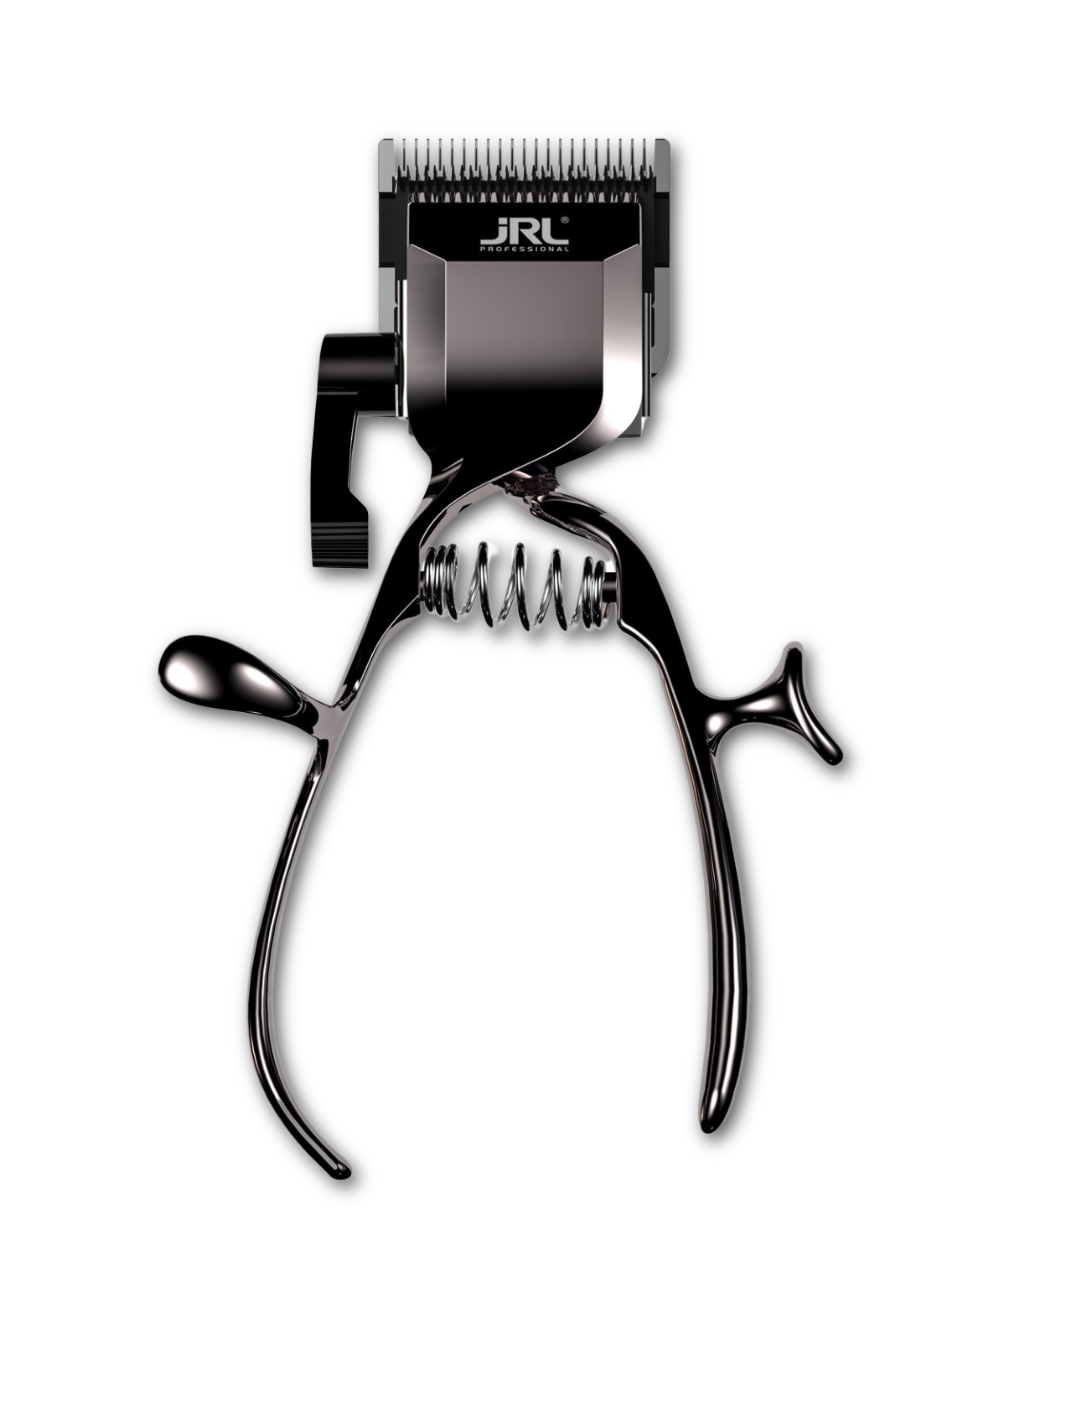 JRL OG 1855 manueller Profi-Clipper in elegantem Design, verfügbar bei Phullcutz, für präzises Haar- und Bartstyling.